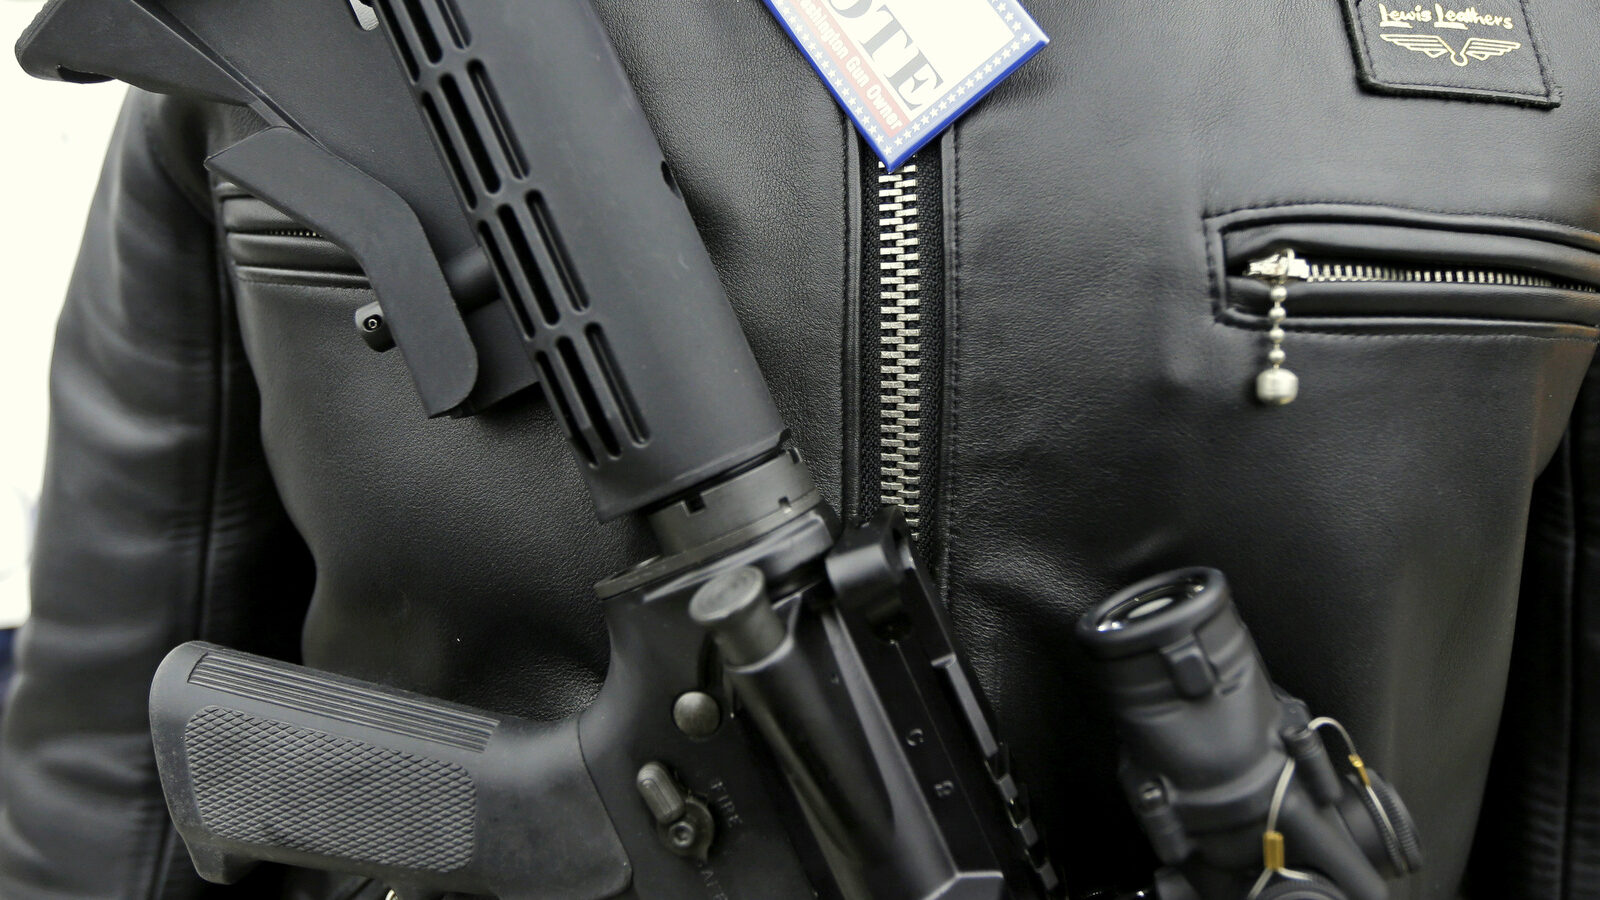 A Colt M4 gun and a button that reads "I Vote - Proud Washington Gun Owner."